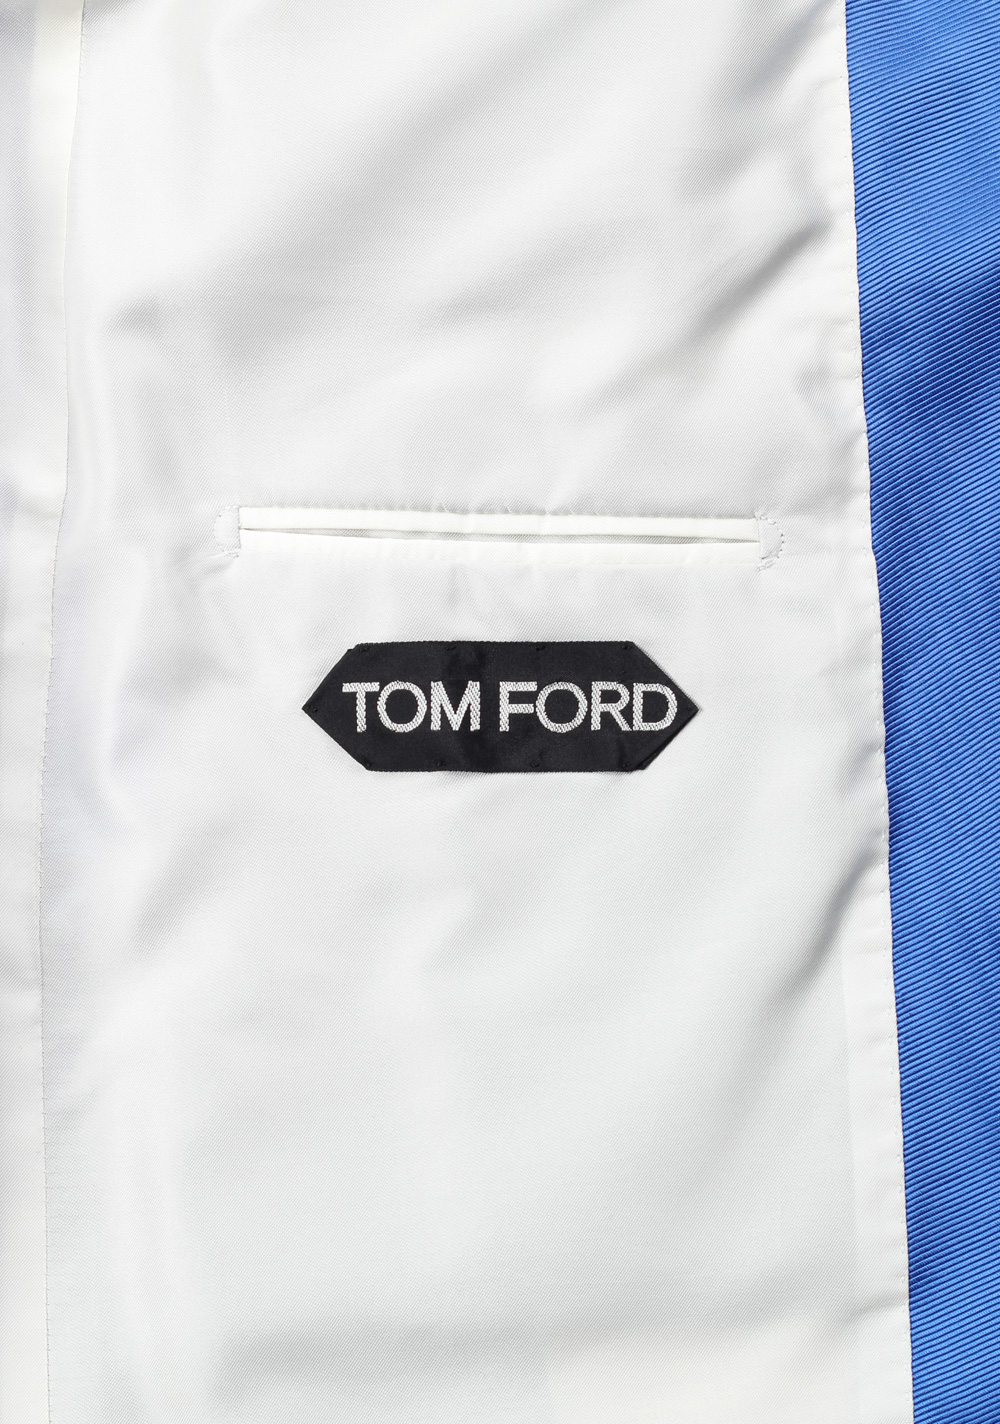 TOM FORD Sport Coat Tuxedo Dinner Jacket Size 56 / 46R U.S. | Costume Limité